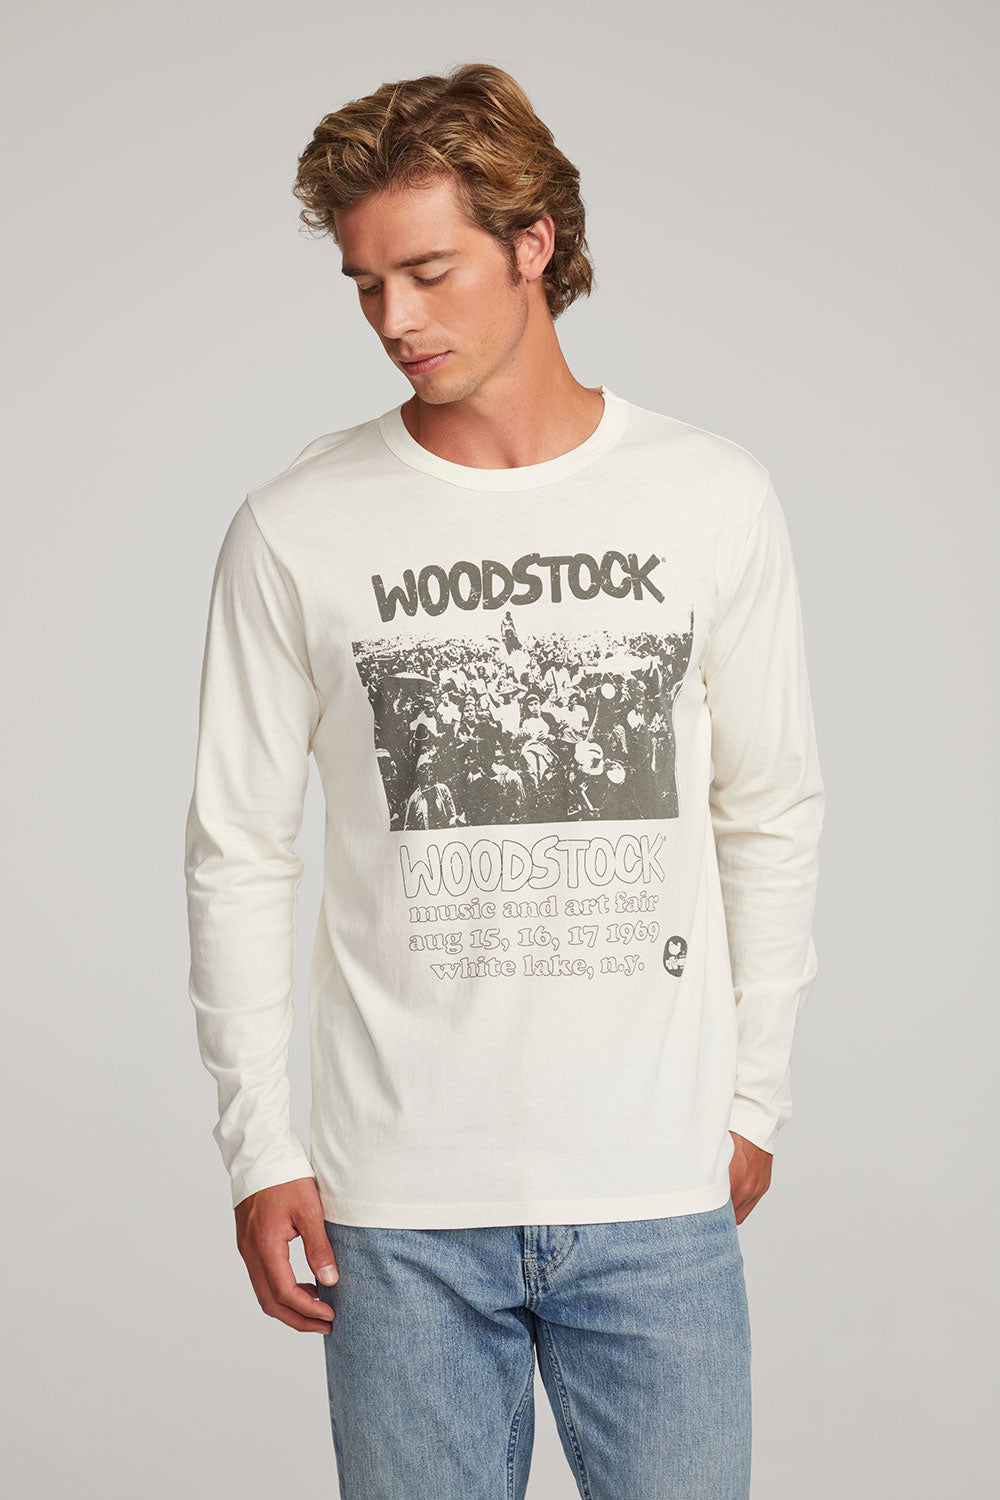 Woodstock Retro Poster Mens Long Sleeve MENS chaserbrand